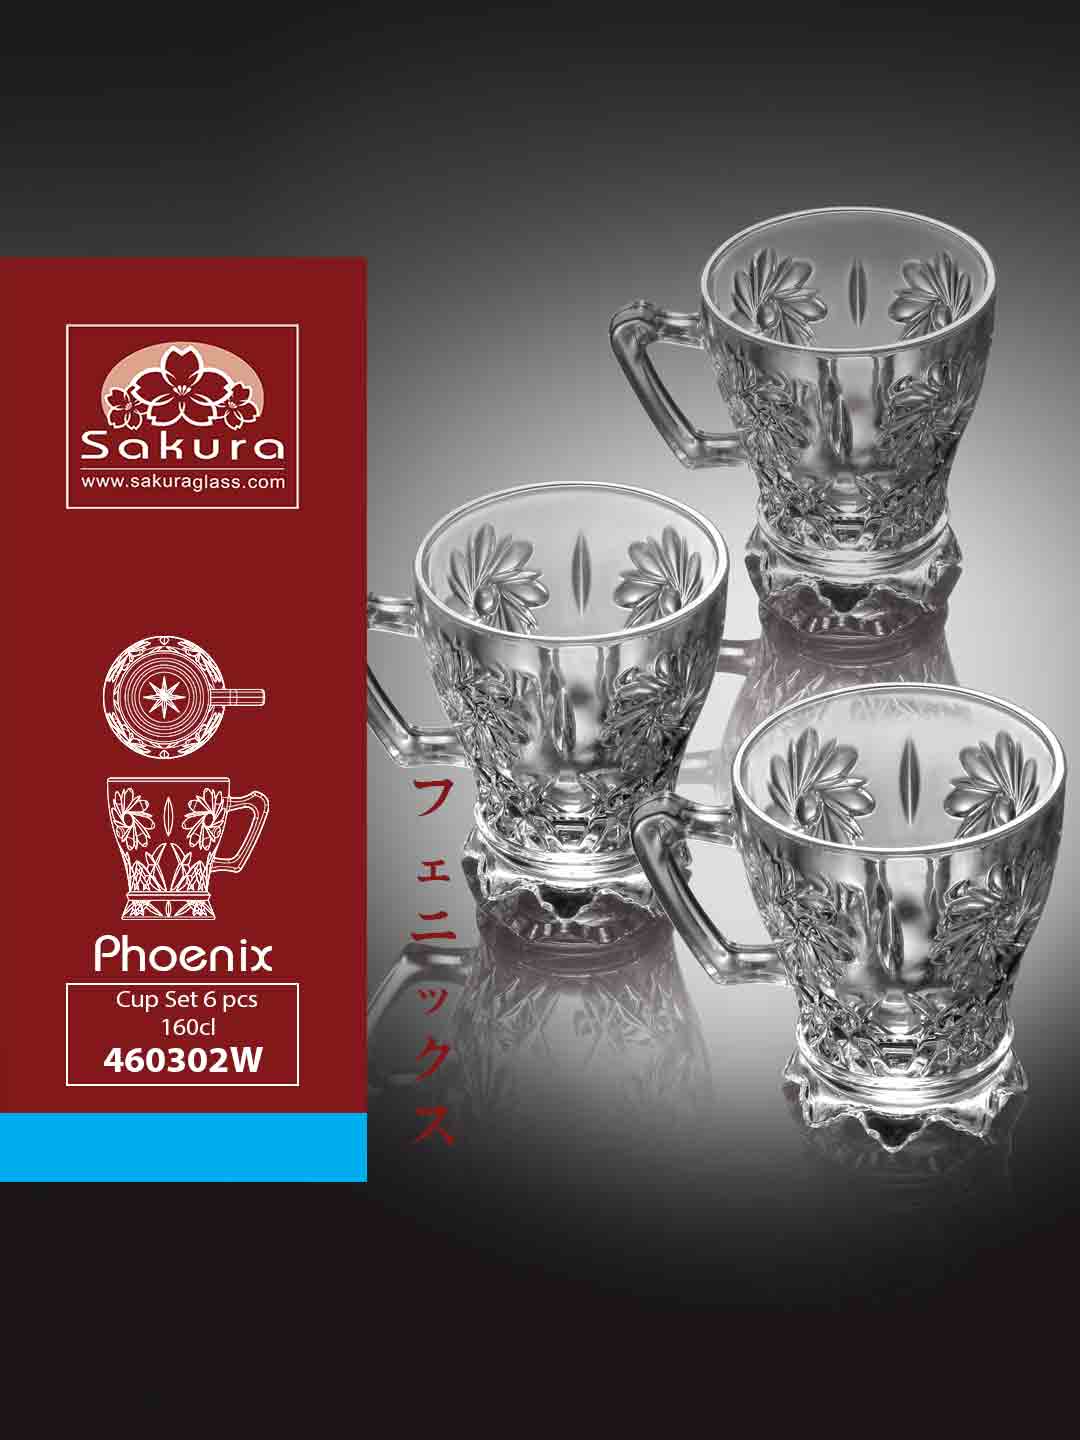 Sakura Product Phoenix Cup Set 6 pcs 160cl 460302W